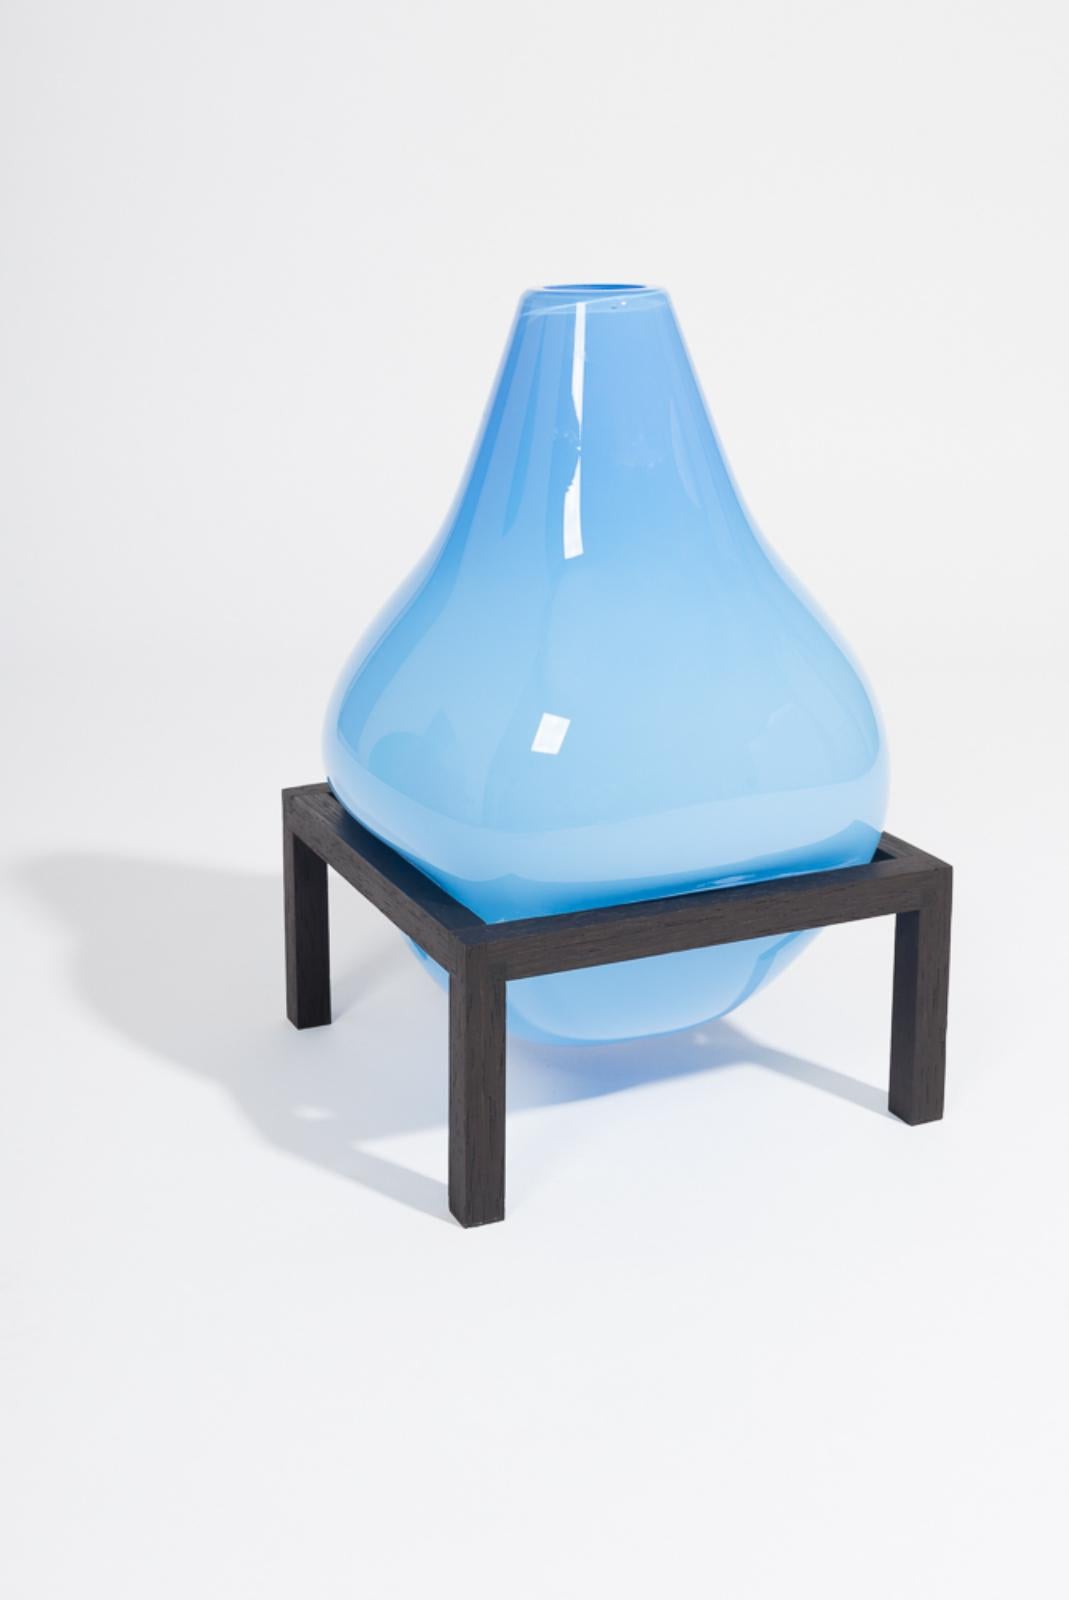 Post-Modern Set of 2 Round Square Blue Bubble Vase by Studio Thier & Van Daalen For Sale